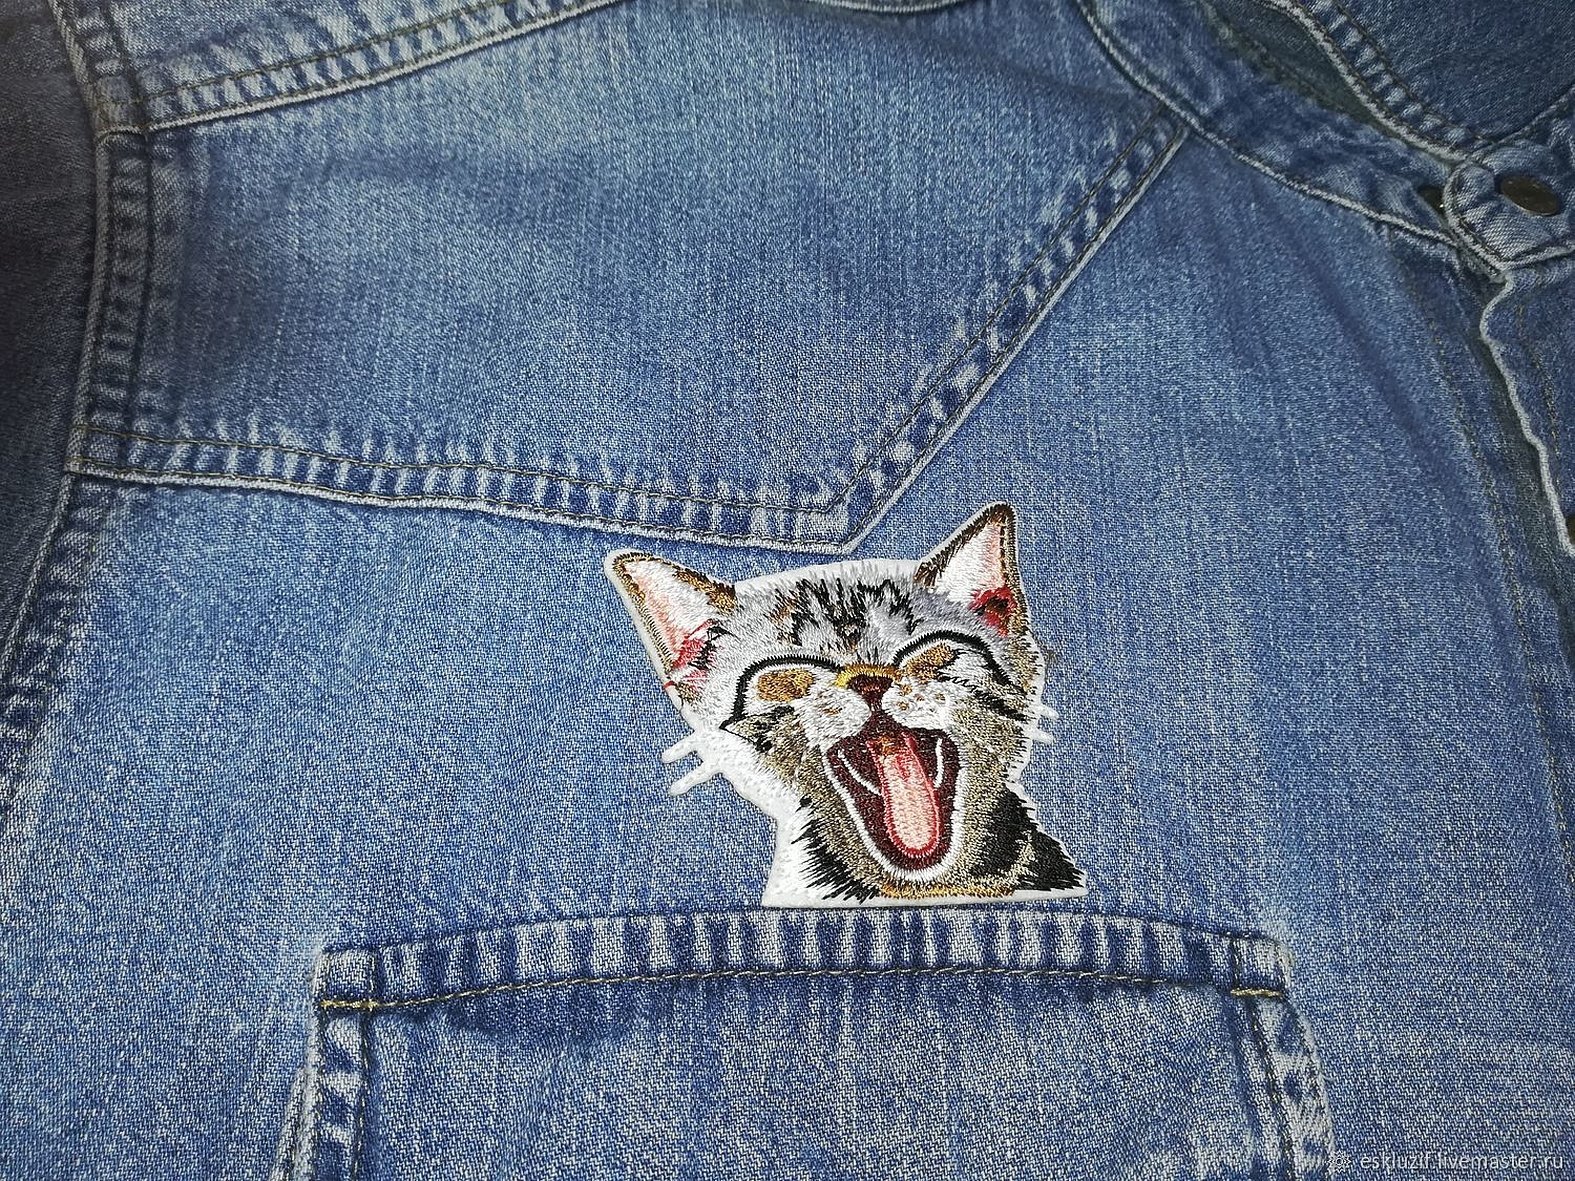 Рисунок на карманах джинсов котик